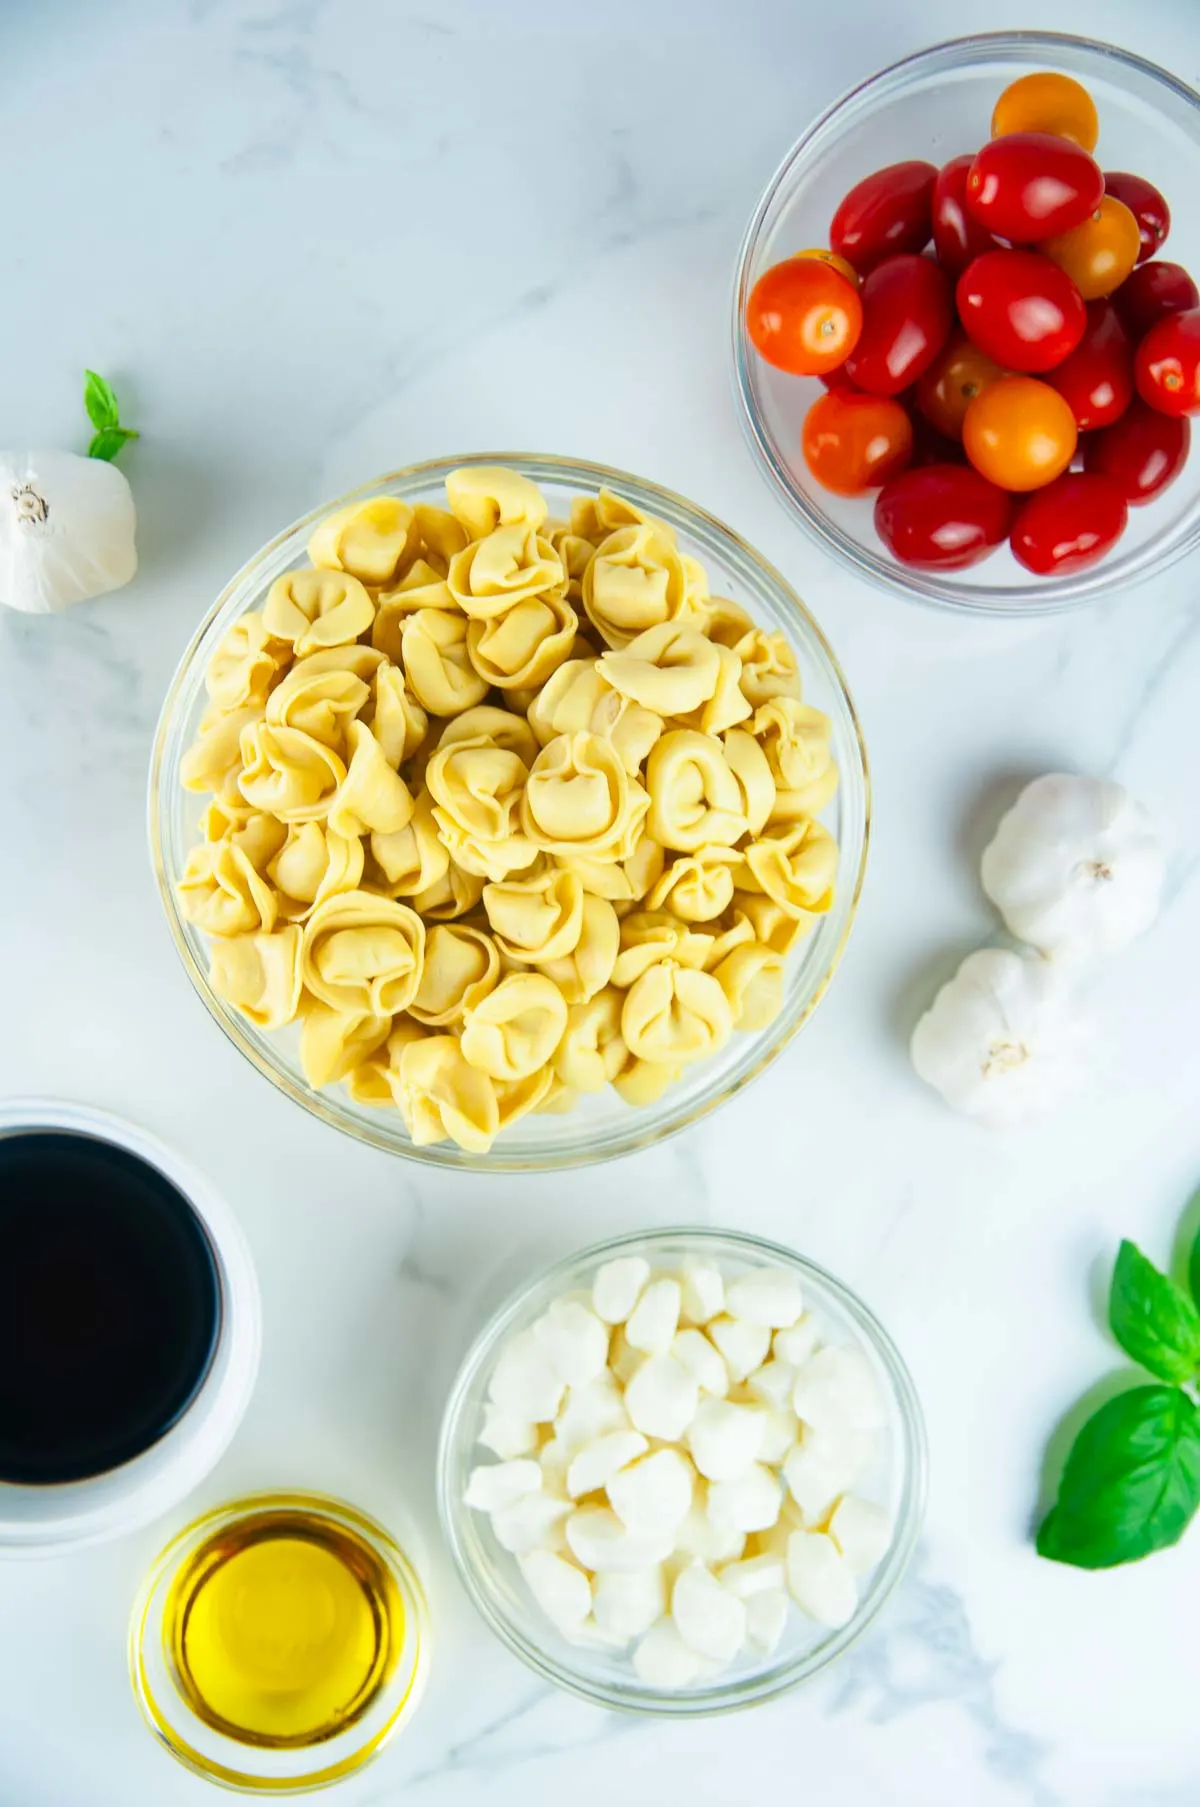 Ingredients for Tortellini Caprese Skewers: Tortellini, Cherry Tomatoes, Mini Mozzarella Balls, Basil, Balsamic Vinegar, and Honey